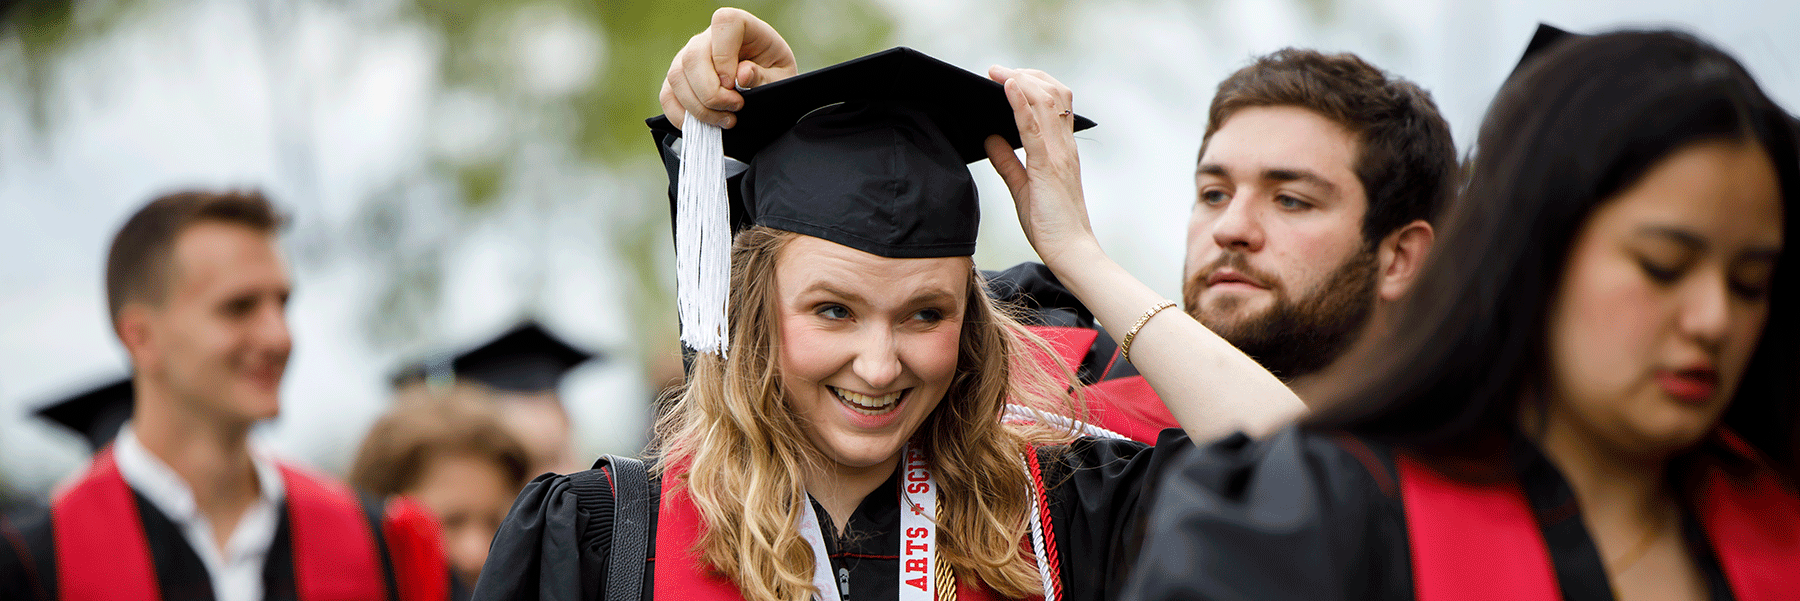 A male graduate helps a a female graduate adjusts the tassel on her graduation cap.